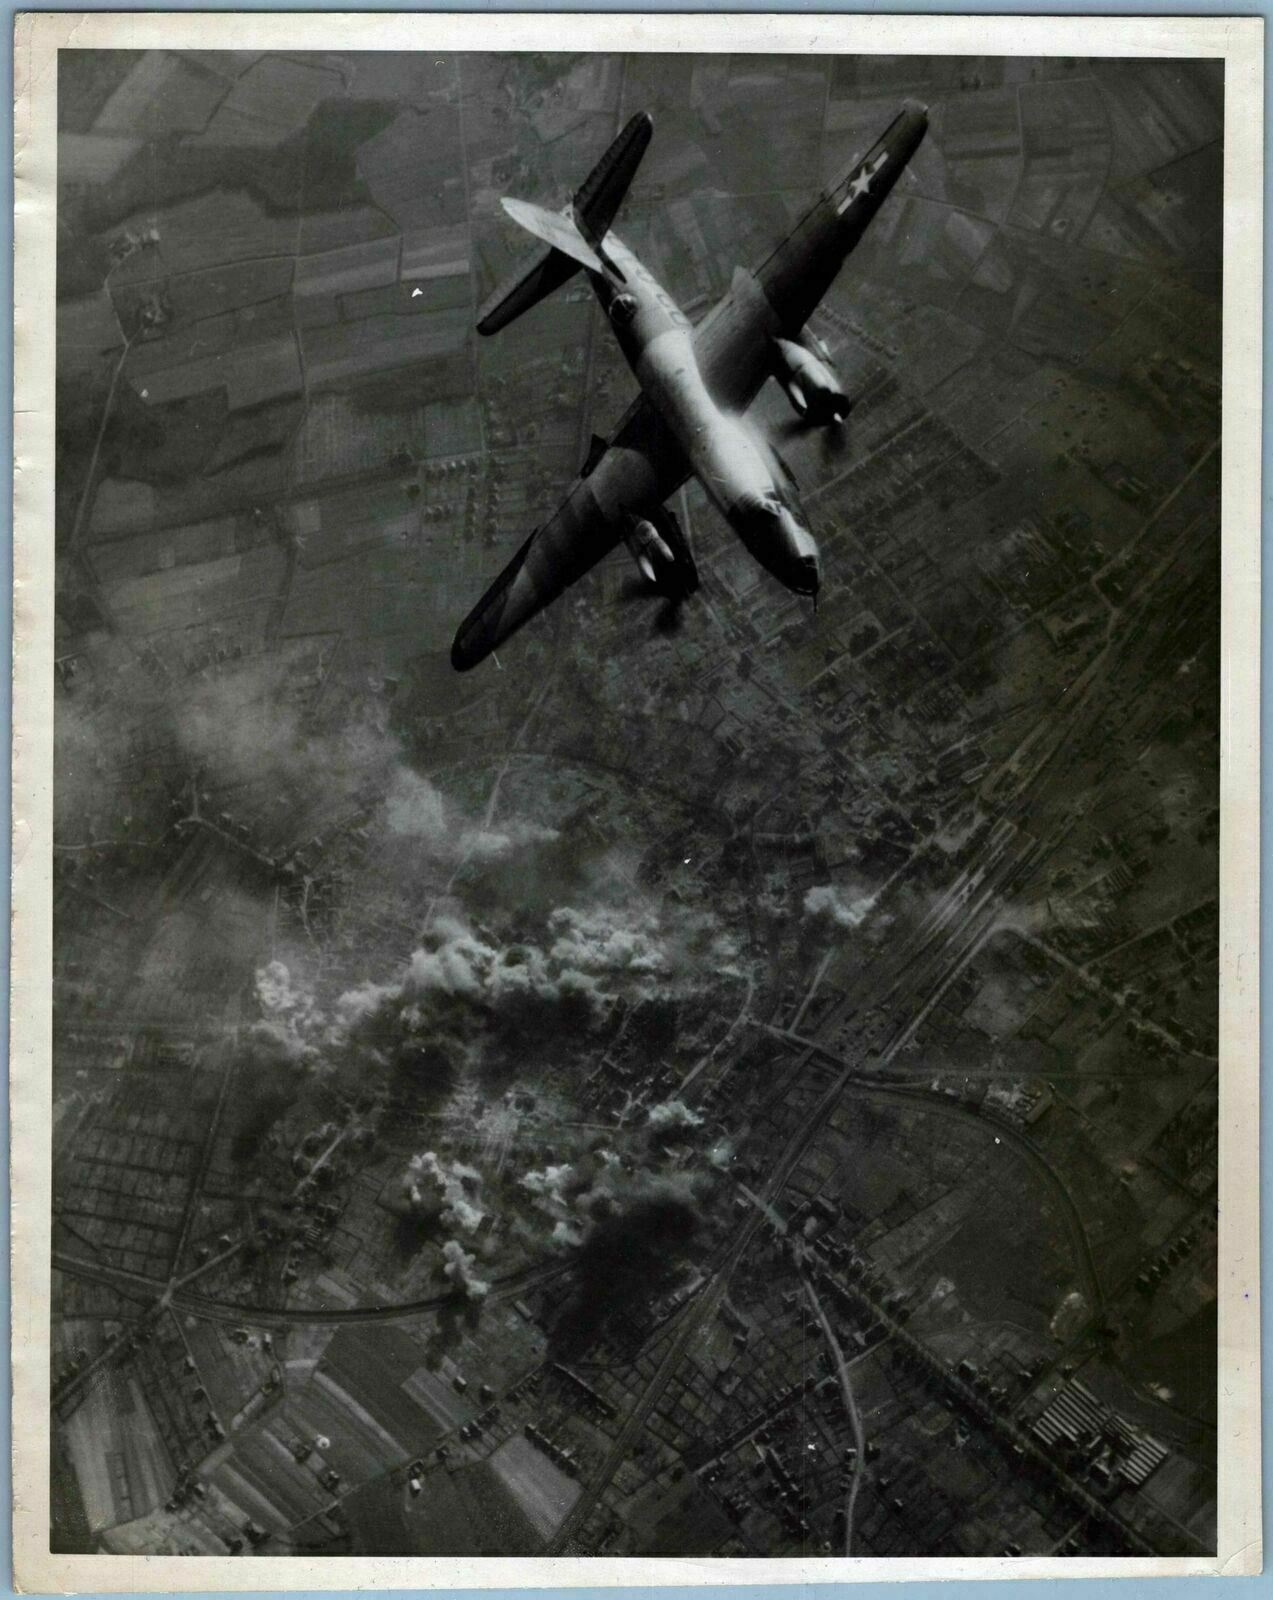 MARTIN B-26 MARAUDER 9TH USAF RUHR GERMANY BOMBING ORIGINAL 1945 WW2 PRESS PHOTO